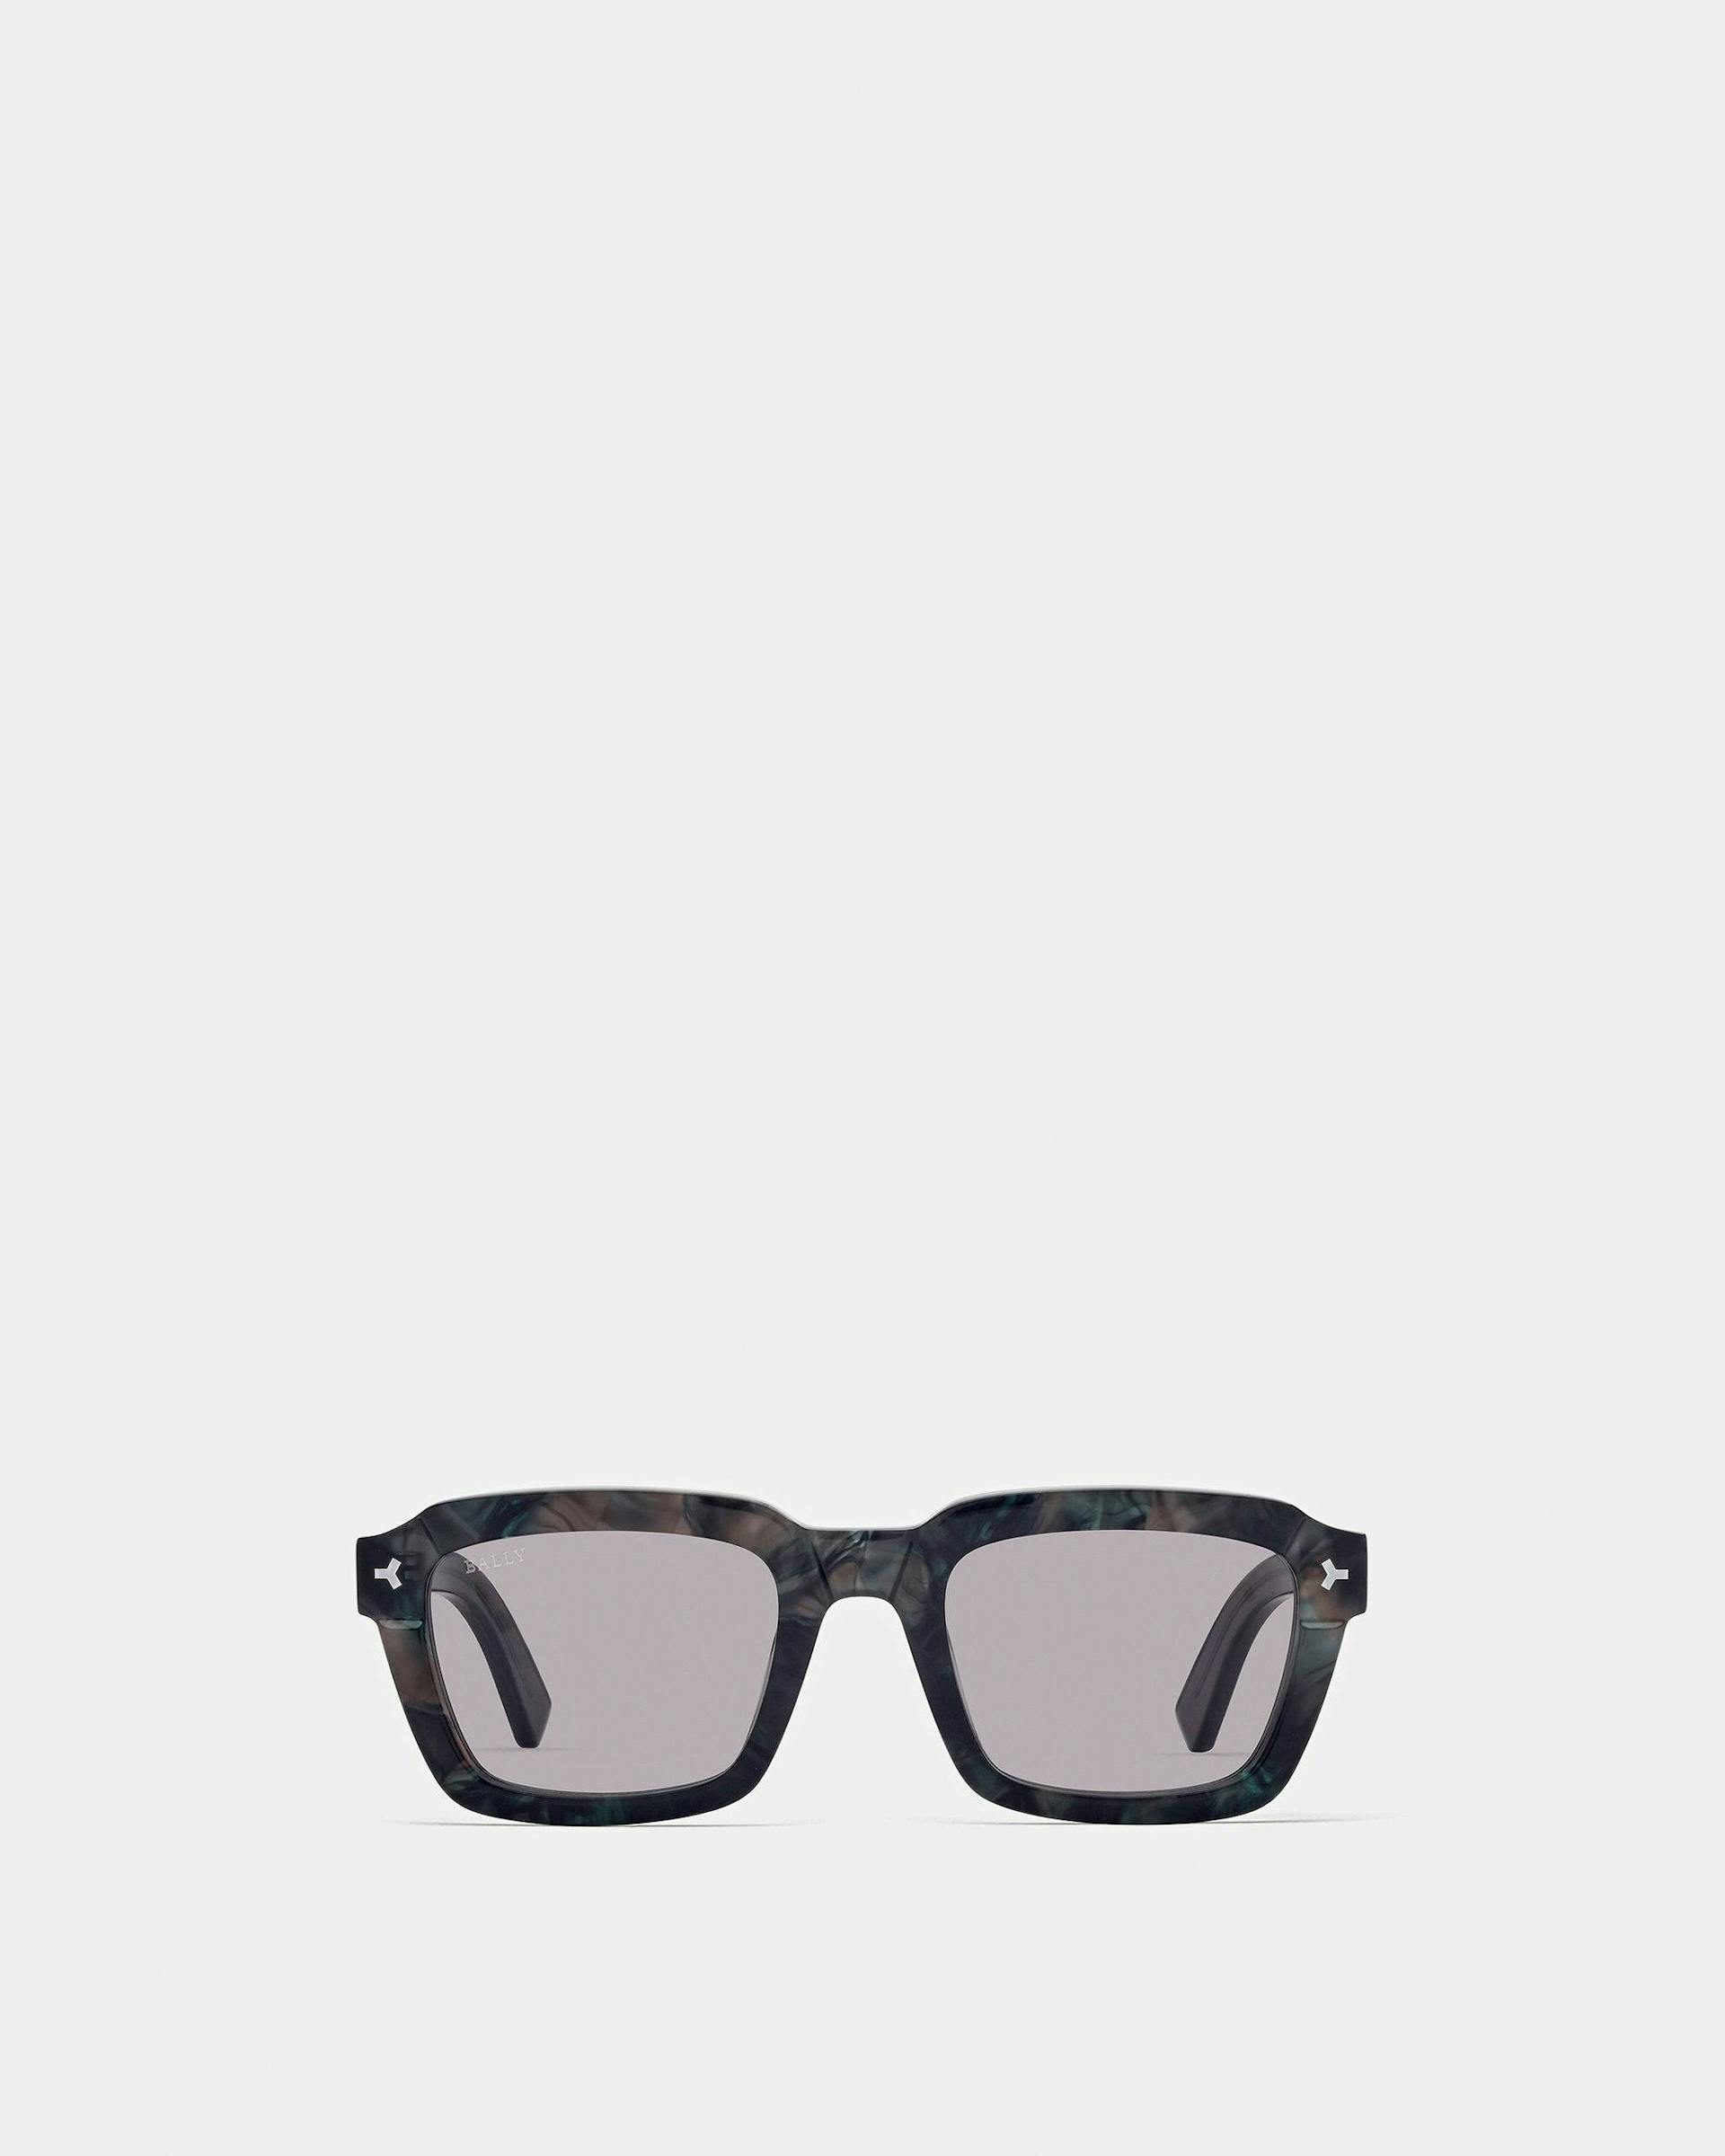 Nicholas Rectangular Full Rim Sunglasses In Black And Gray - Men's - Bally - 01